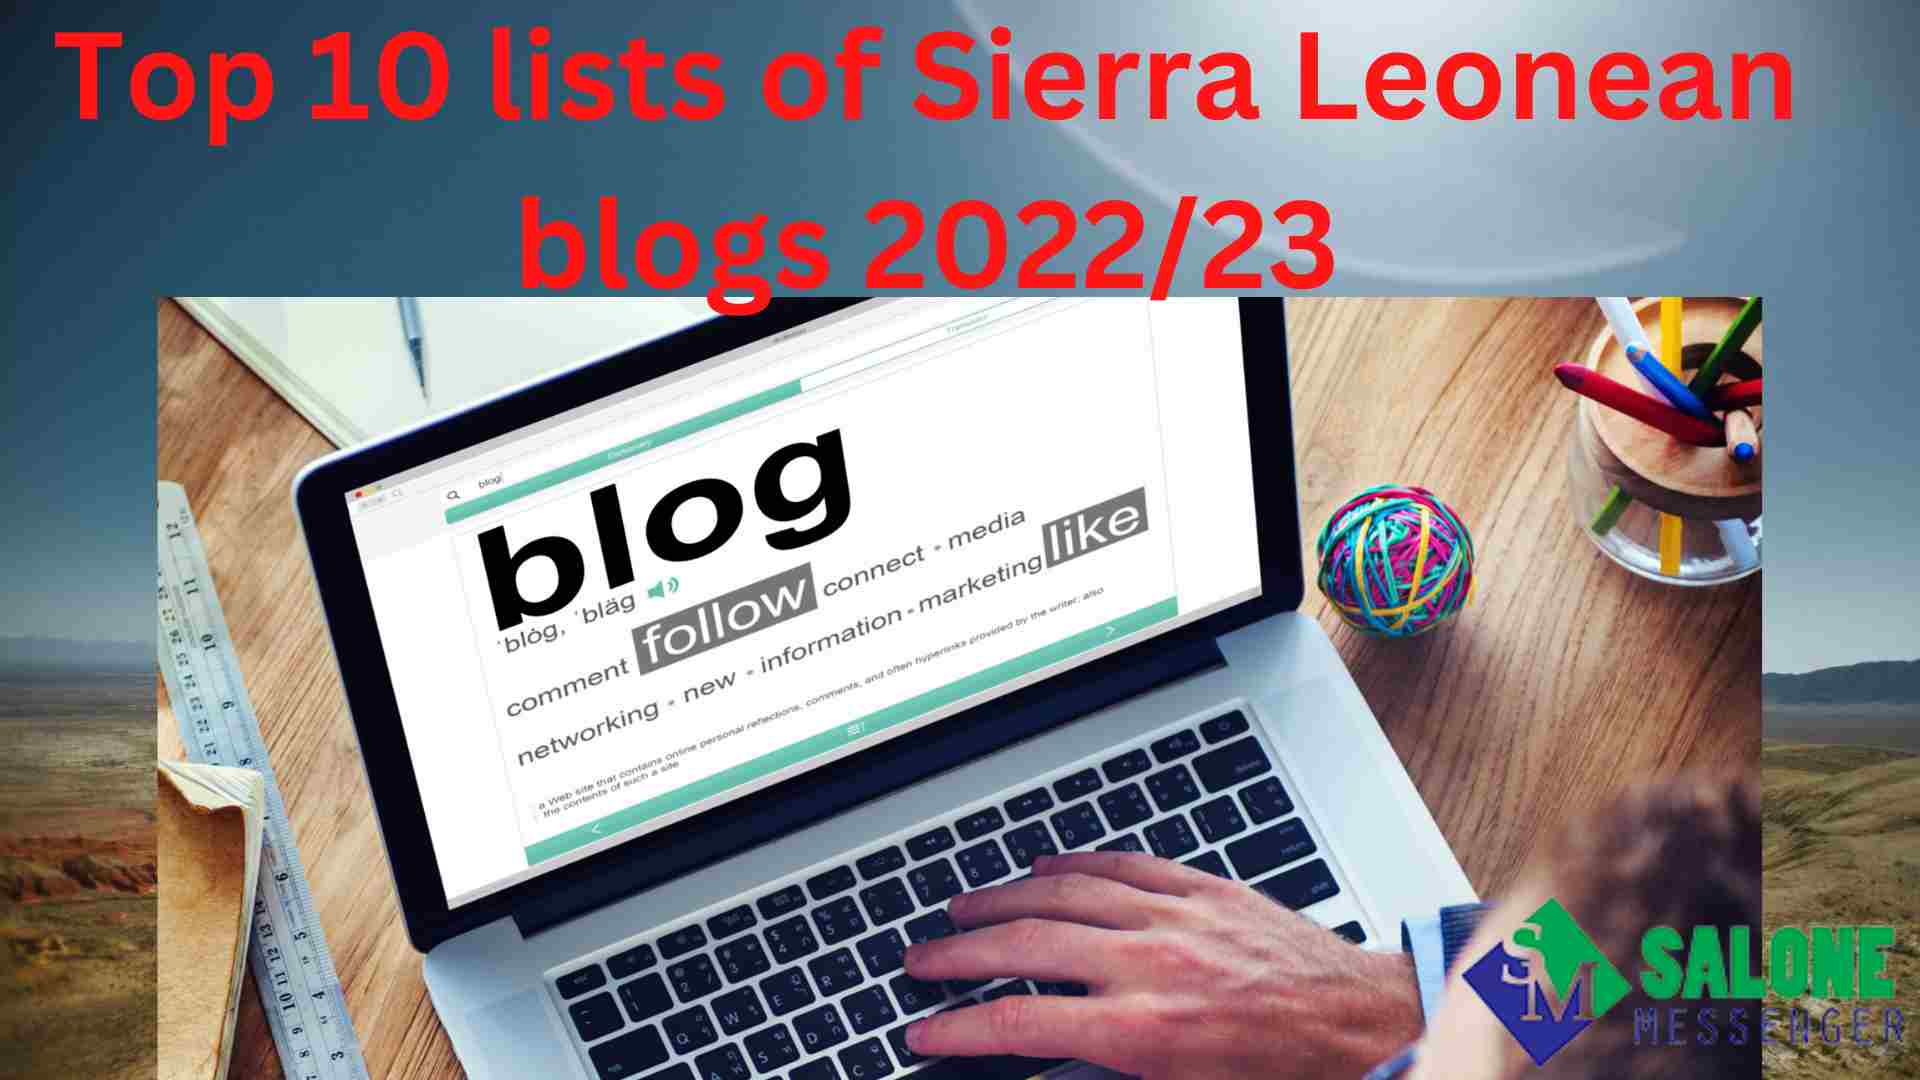 Top 10 lists of Sierra Leonean blogs You Should Follow In 2022/23